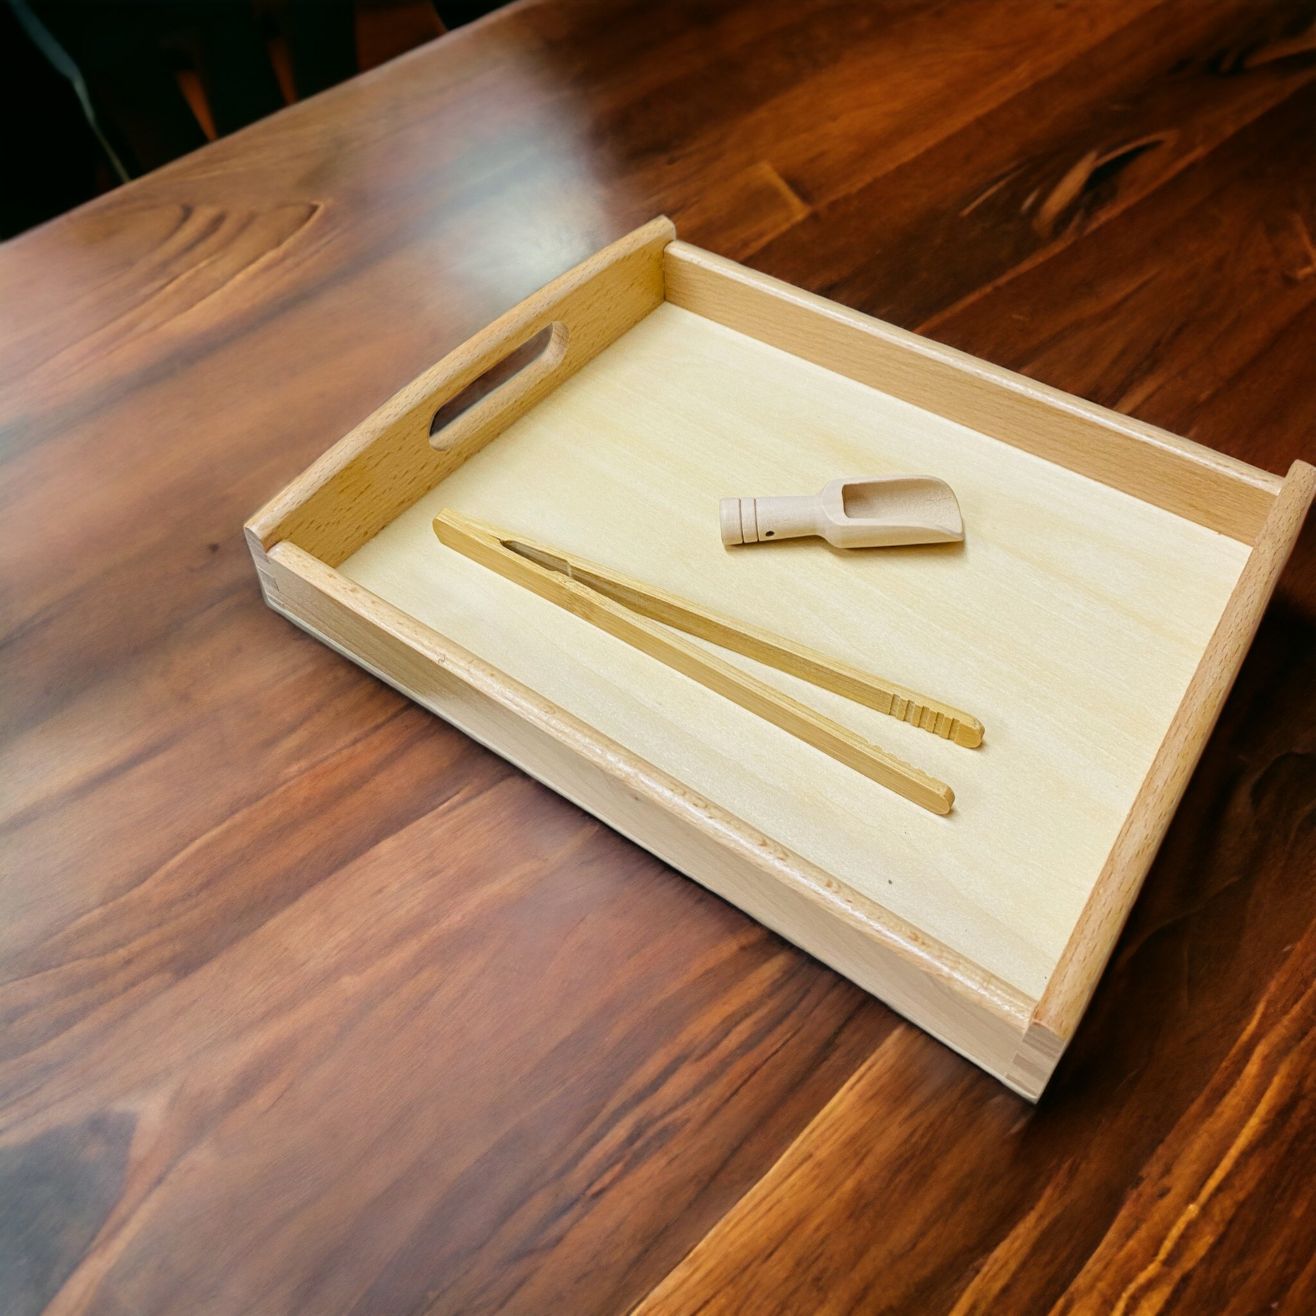 Montessori wooden tray with tweezer and mini sccop